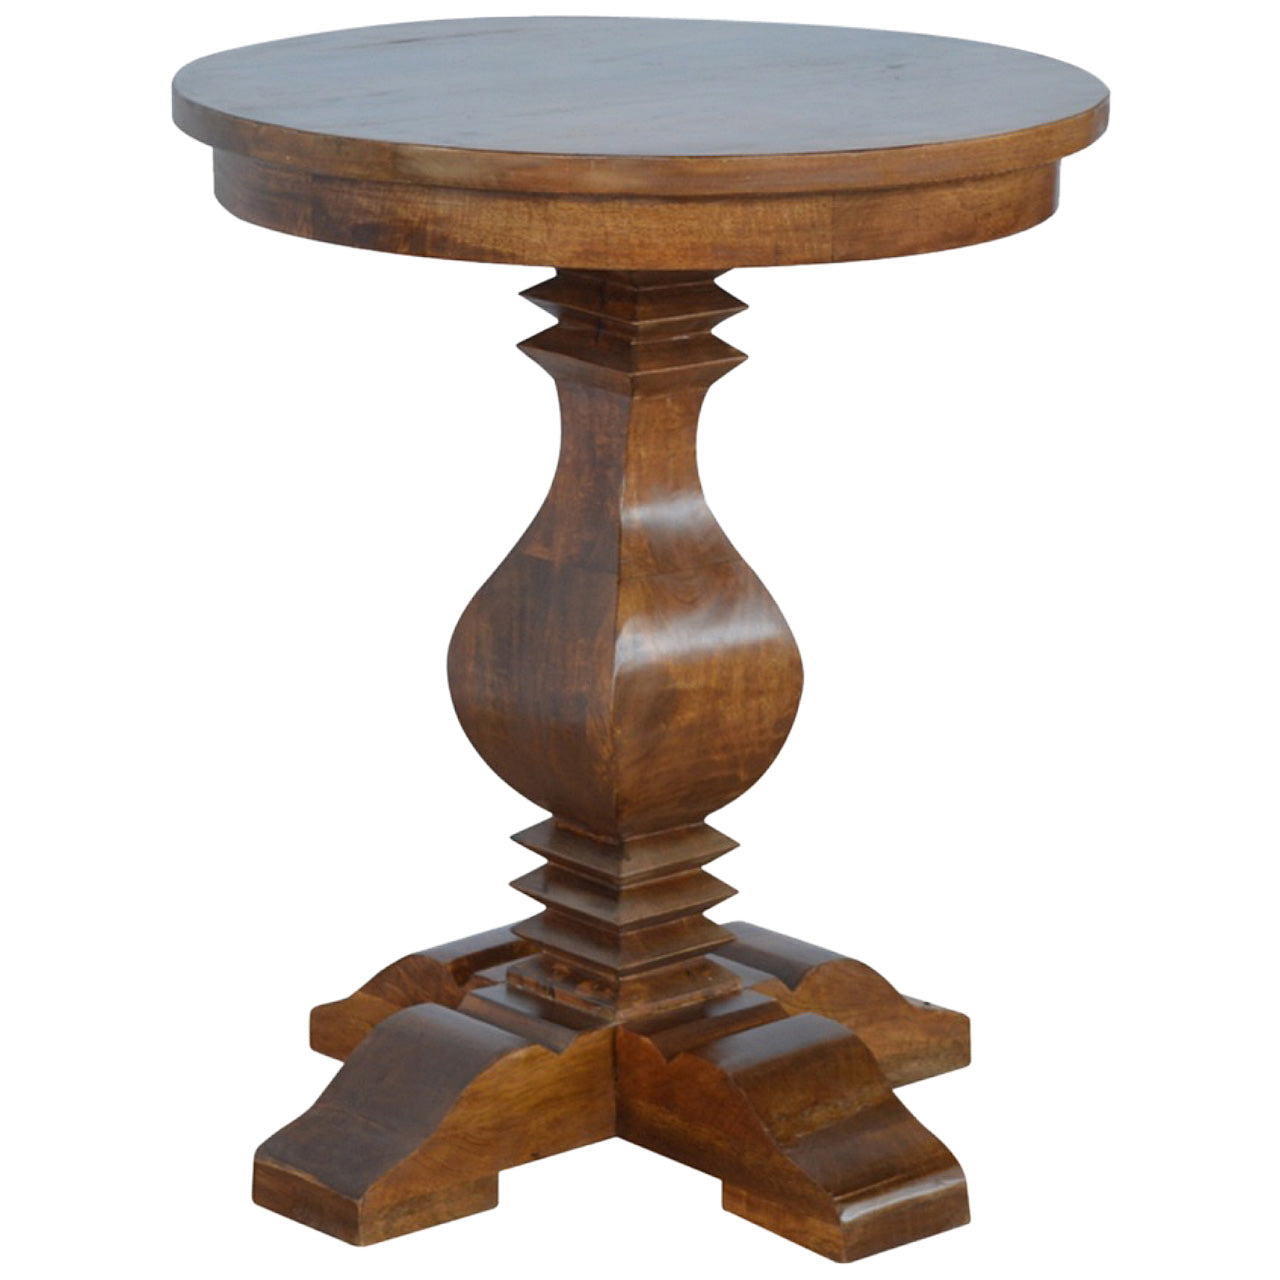 View Round Pedestal Tea Table information